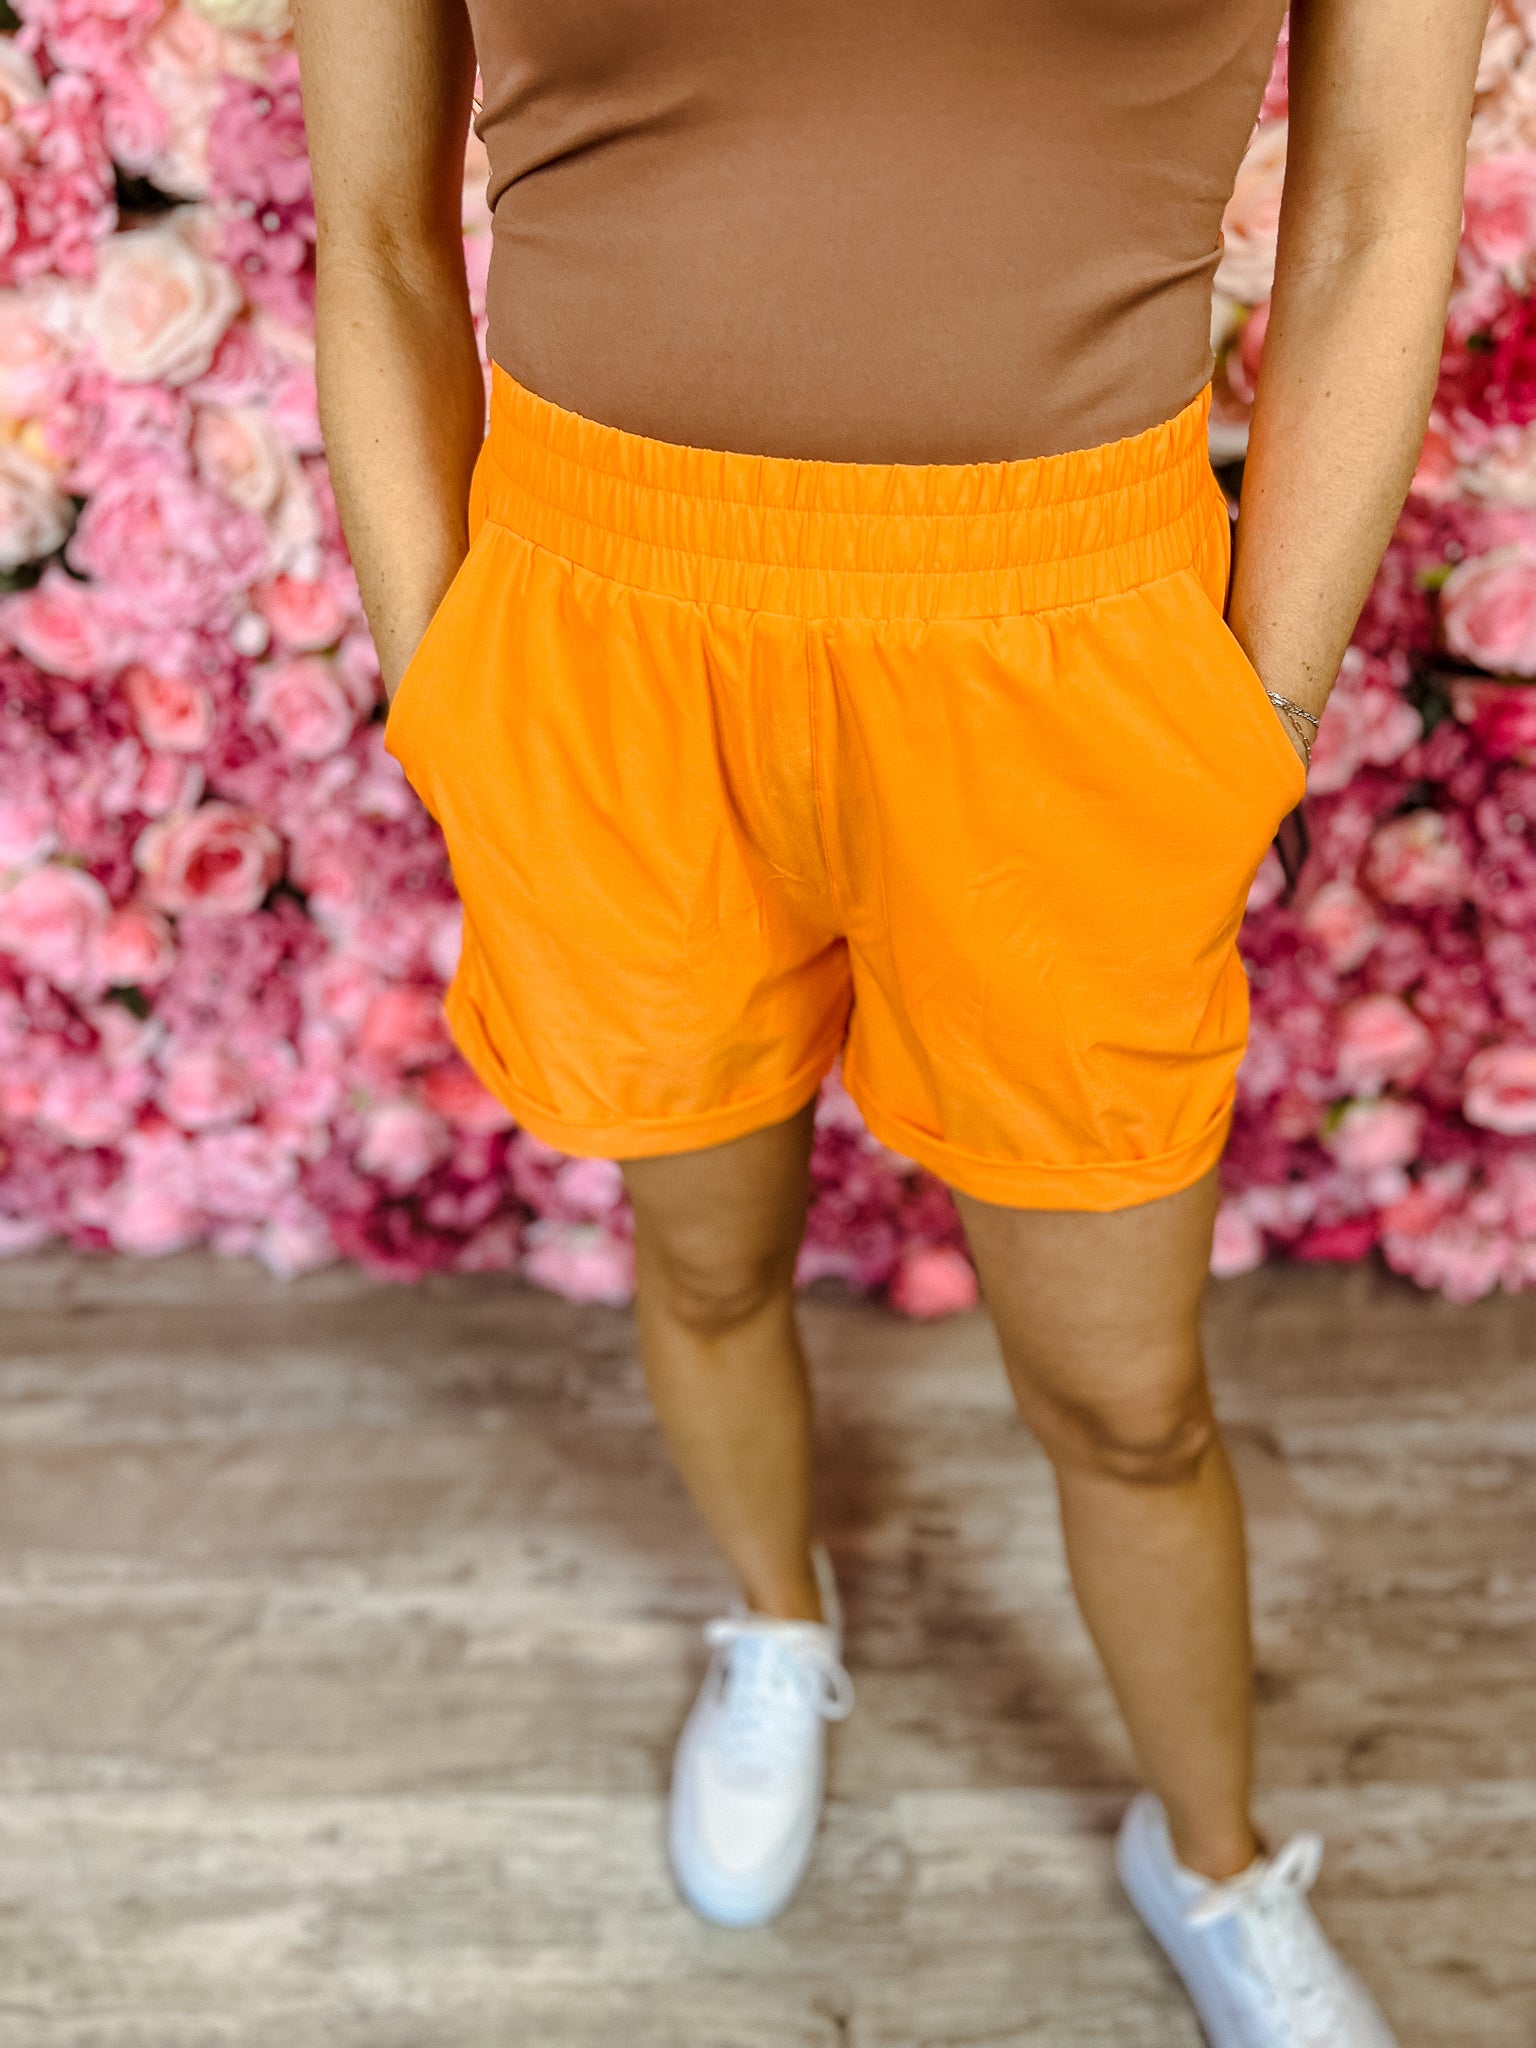 Rumor Has It Cuffed Shorts - Orange